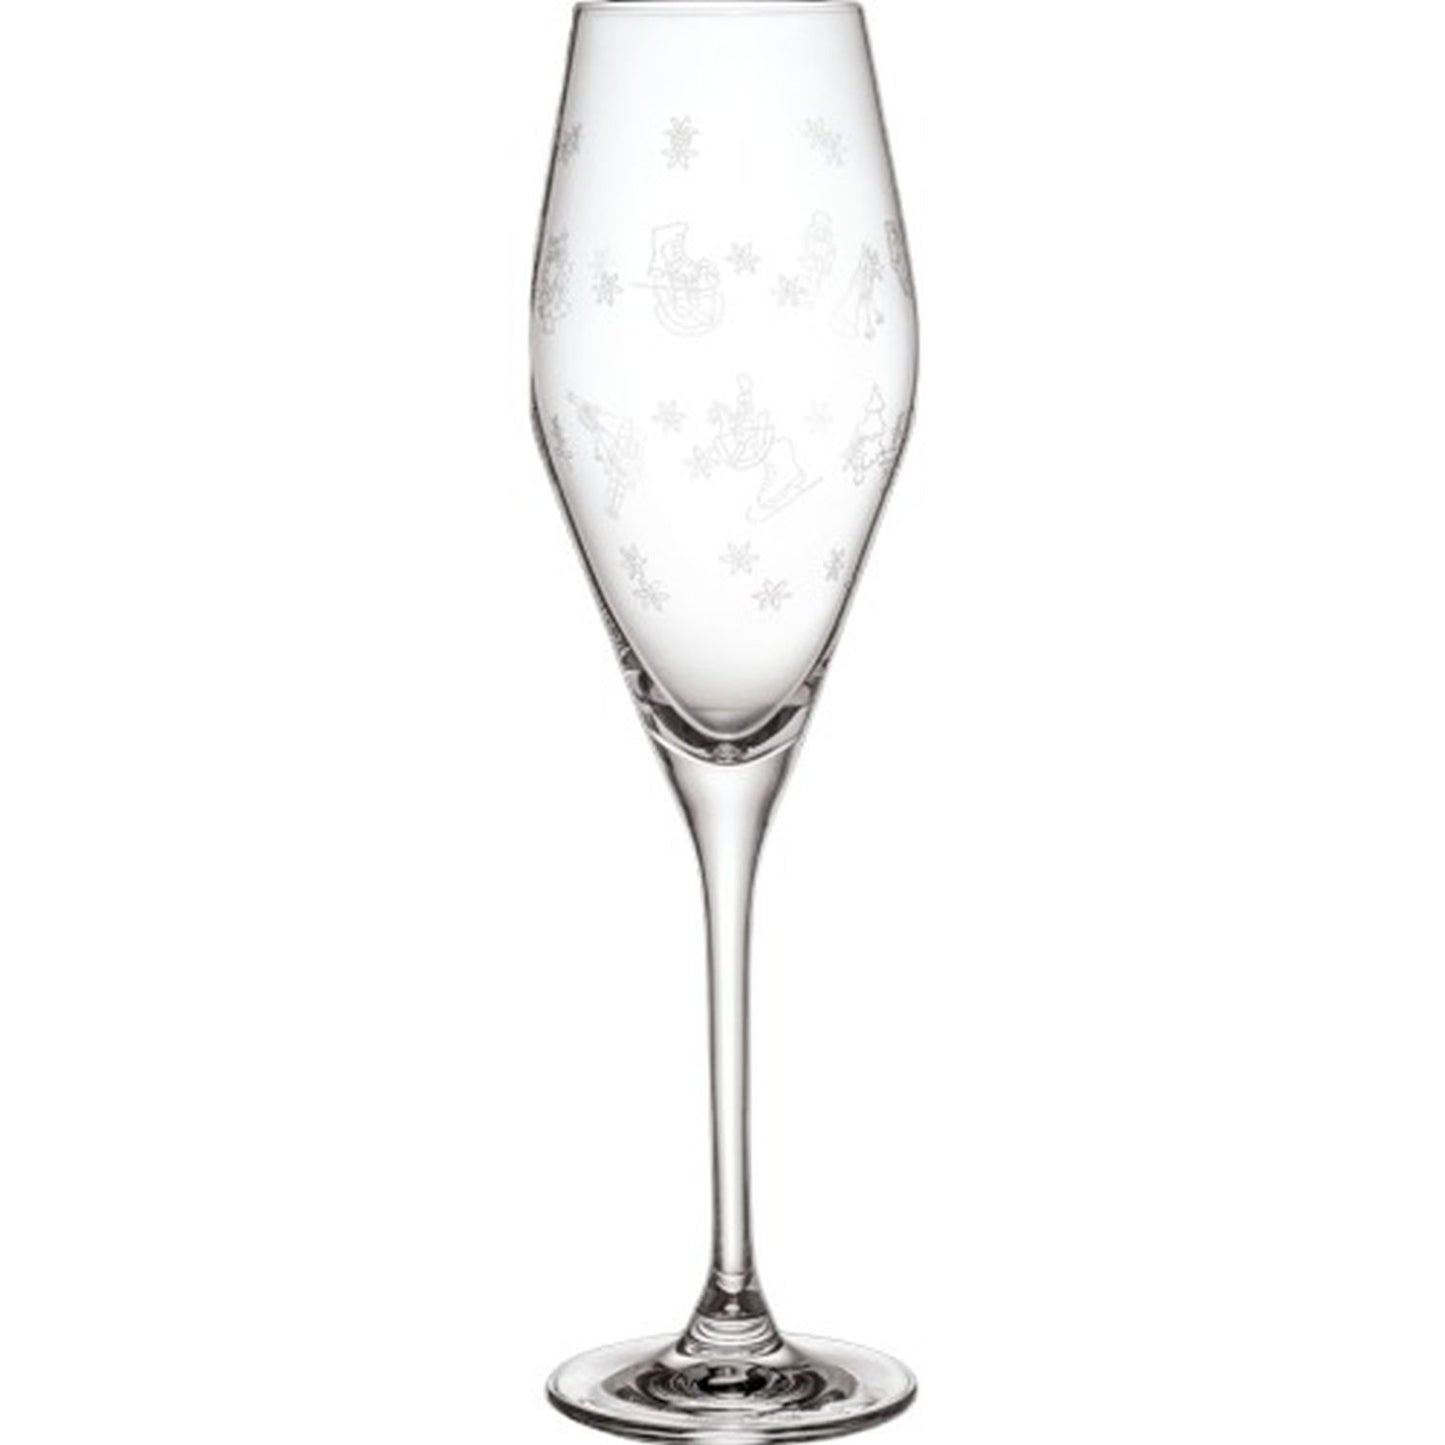 Villeroy & Boch Toy's Delight Stems Champagne Flute, Set of 2, 9oz